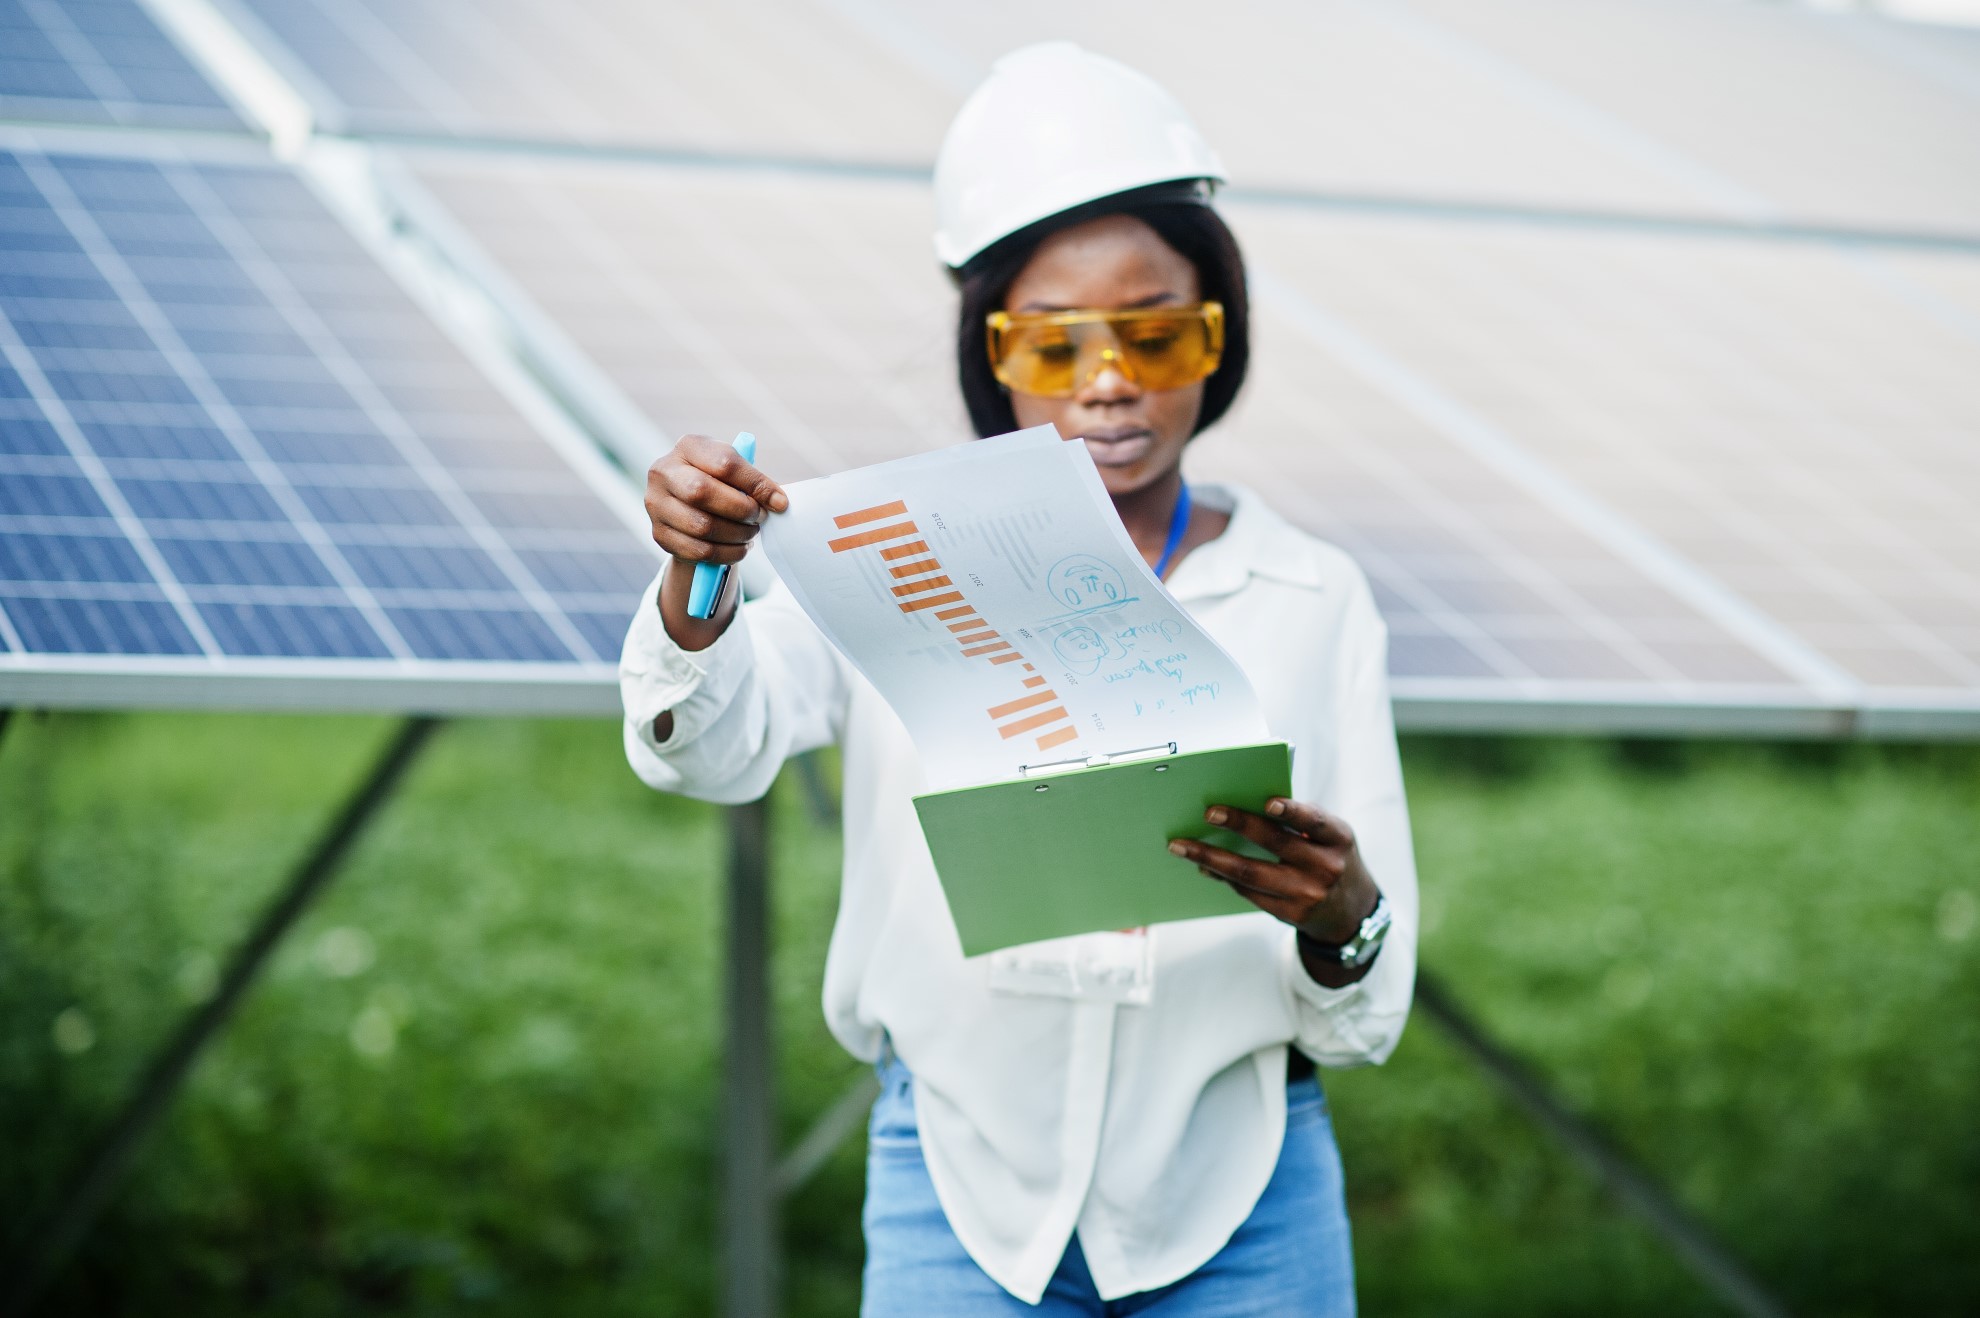 africa-solar-energy-concept-2021-08-31-08-56-48-utc